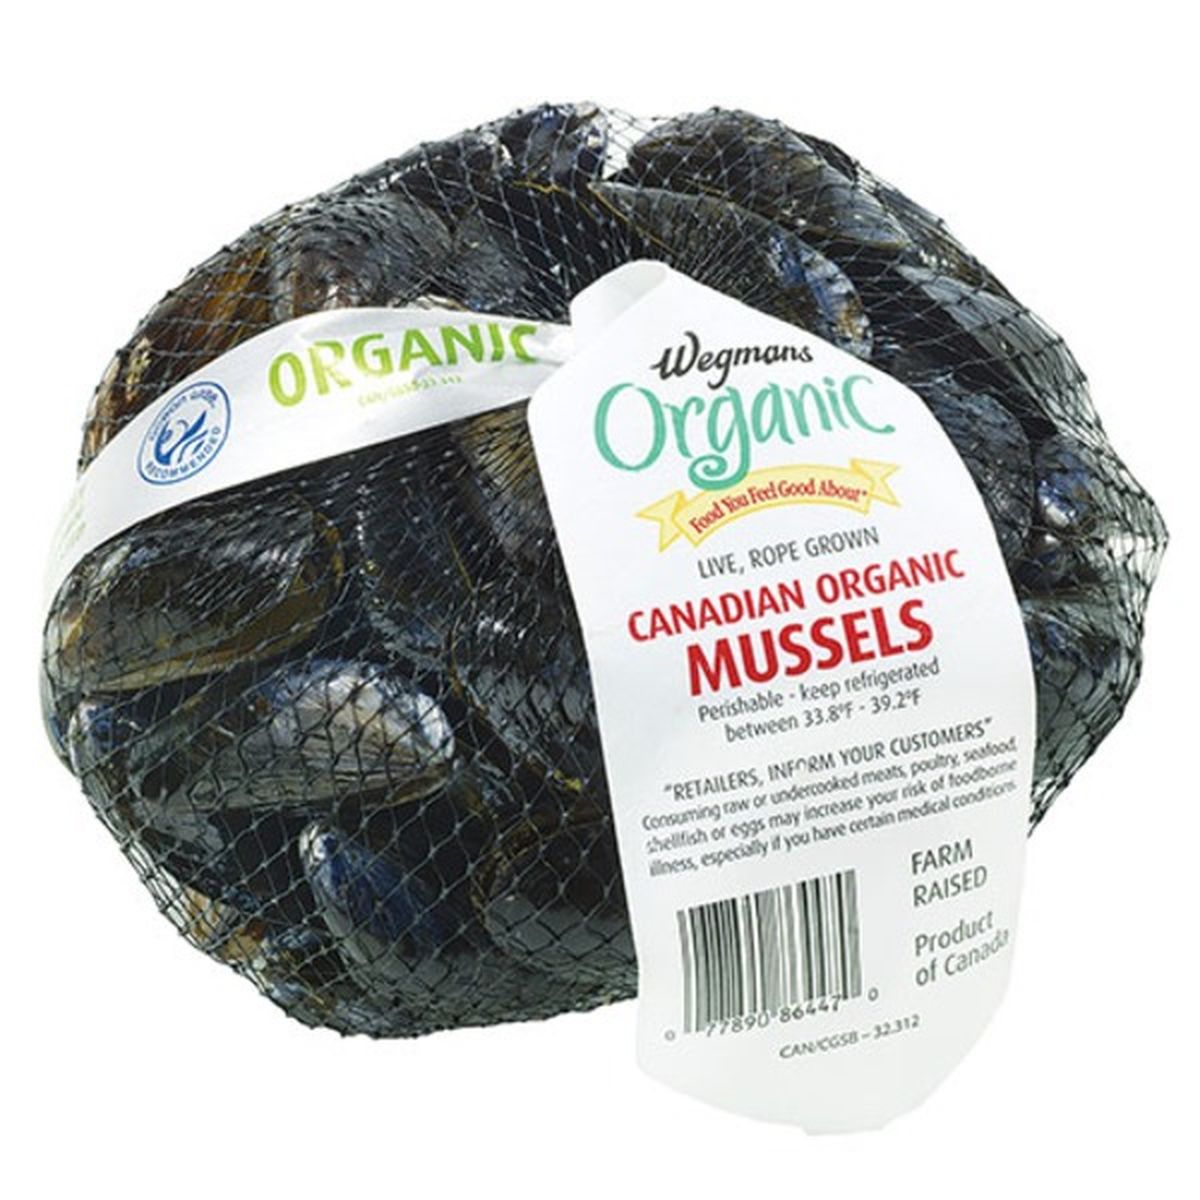 Calories in Wegmans Canadian Organic Mussels